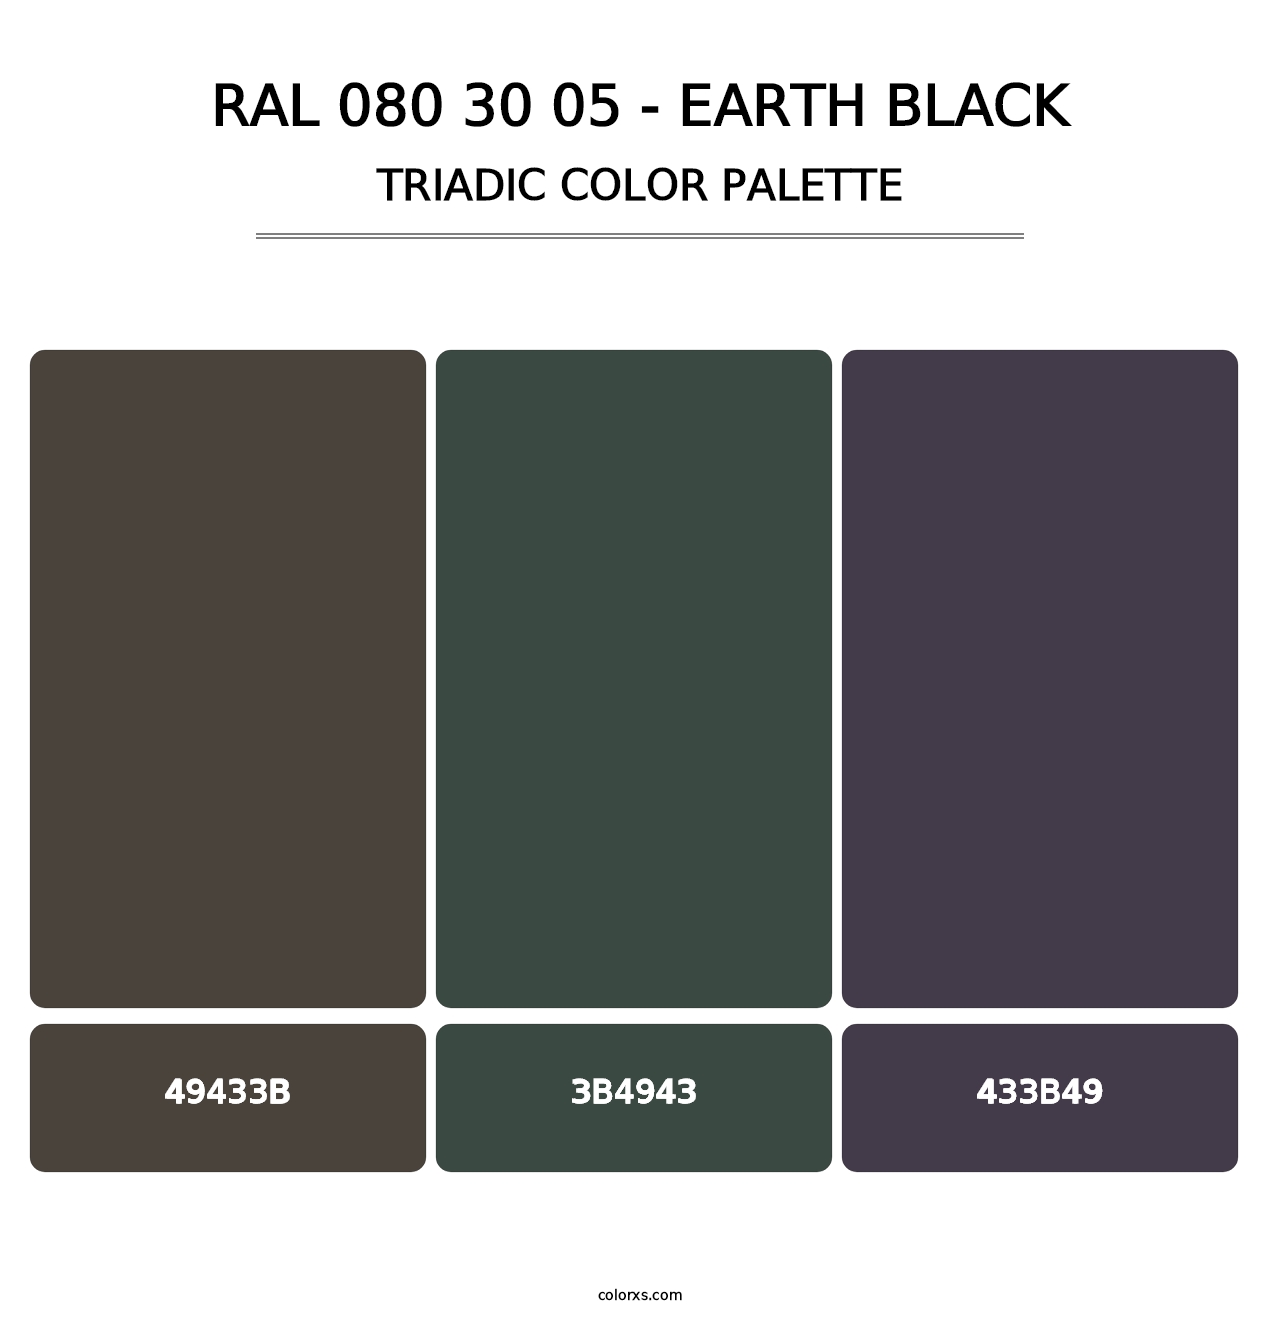 RAL 080 30 05 - Earth Black - Triadic Color Palette